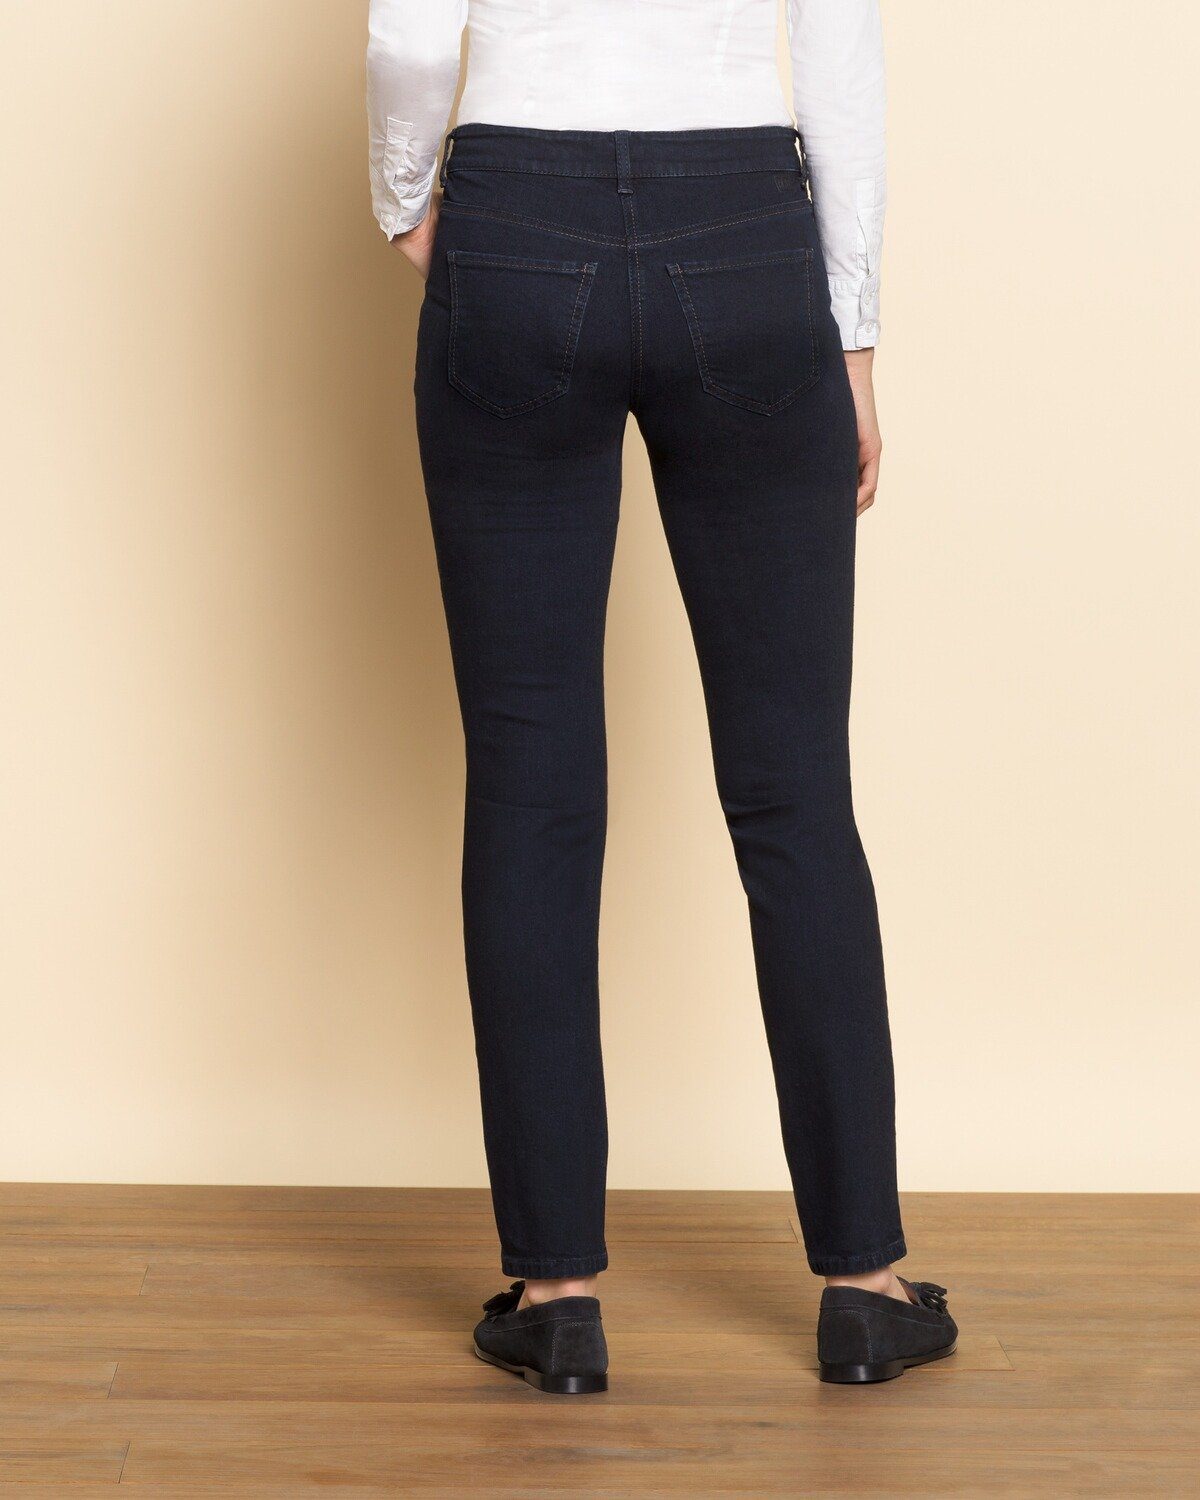 Angela Rinsewash/L32 5-Pocket-Jeans Pipe MAC Jeans